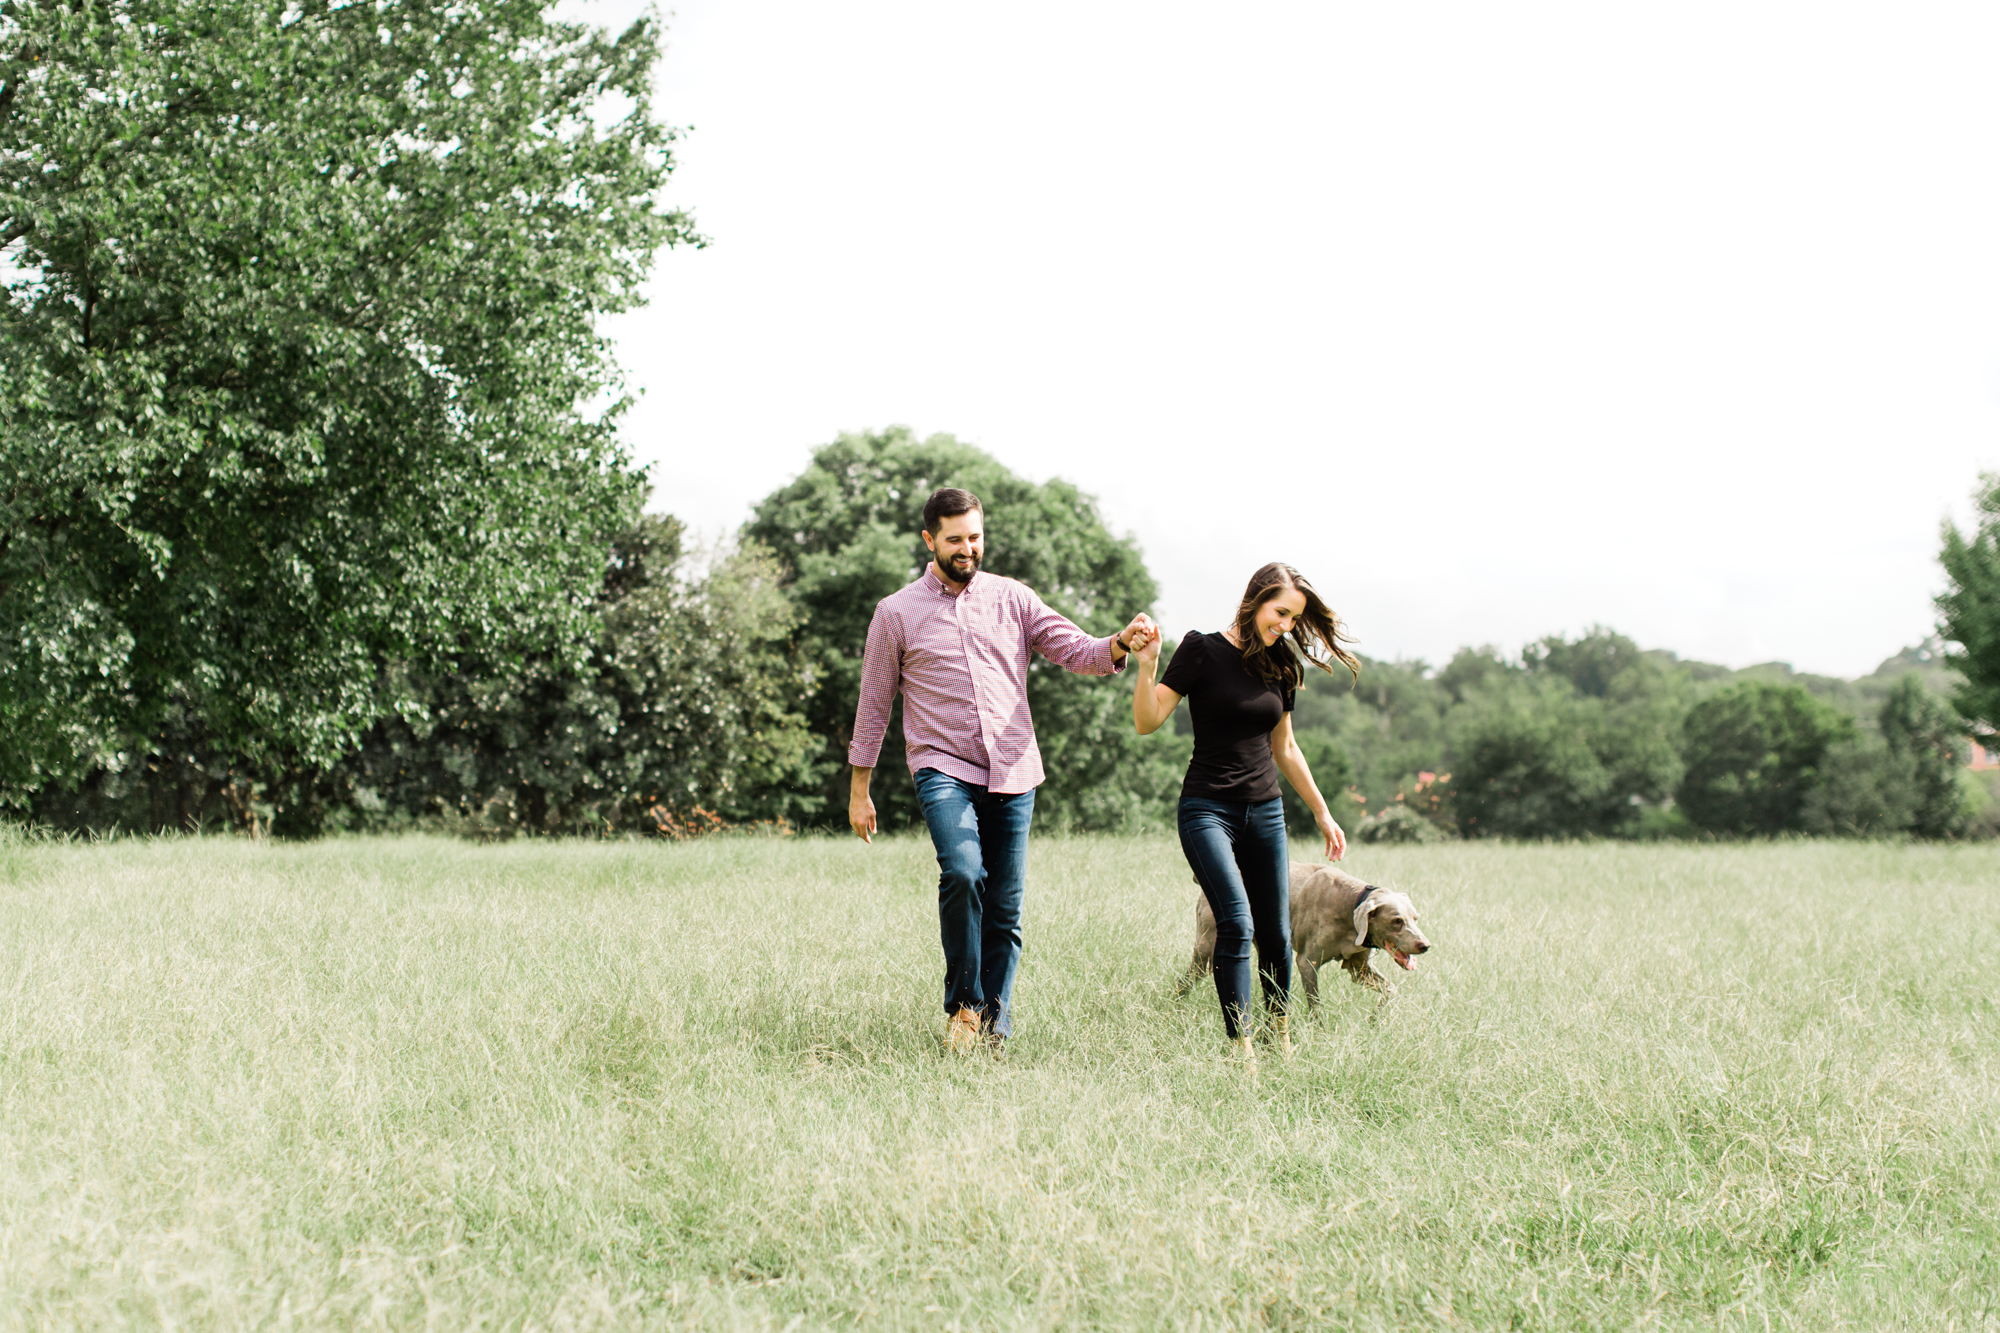 Engaged couple walks their dog through a grassy field